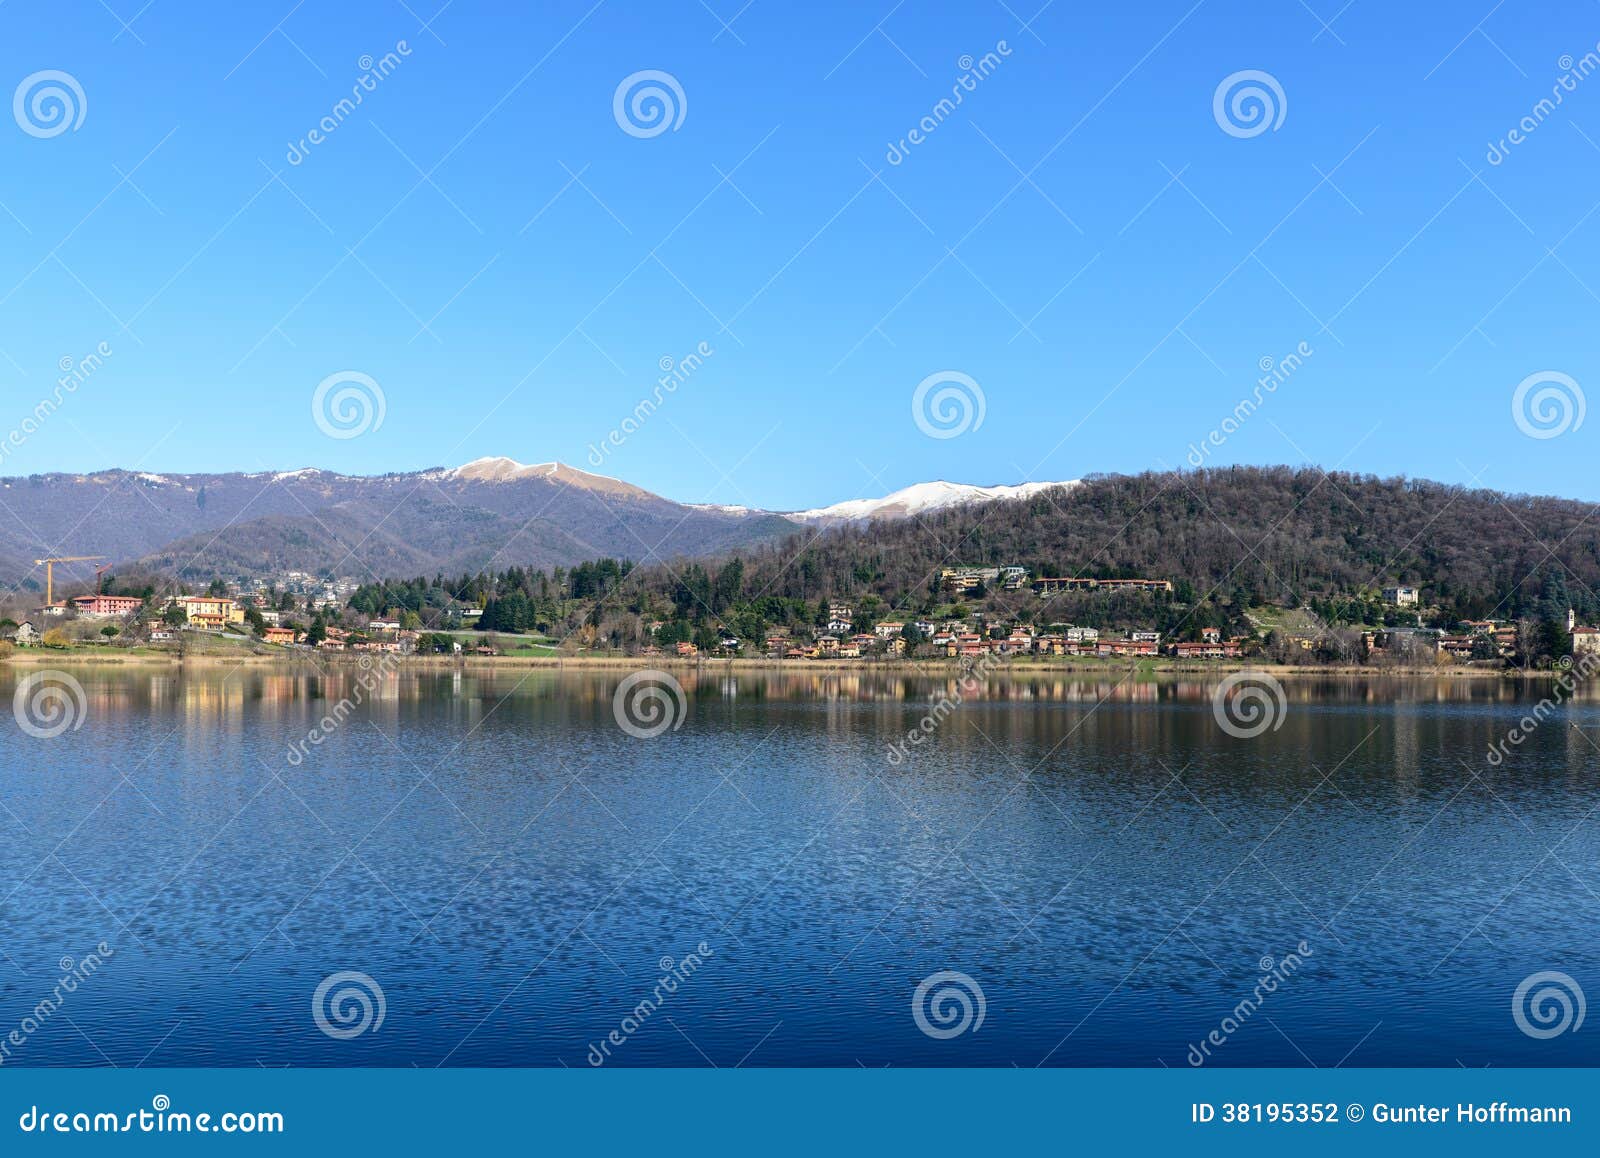 lake of montorfano (italy)